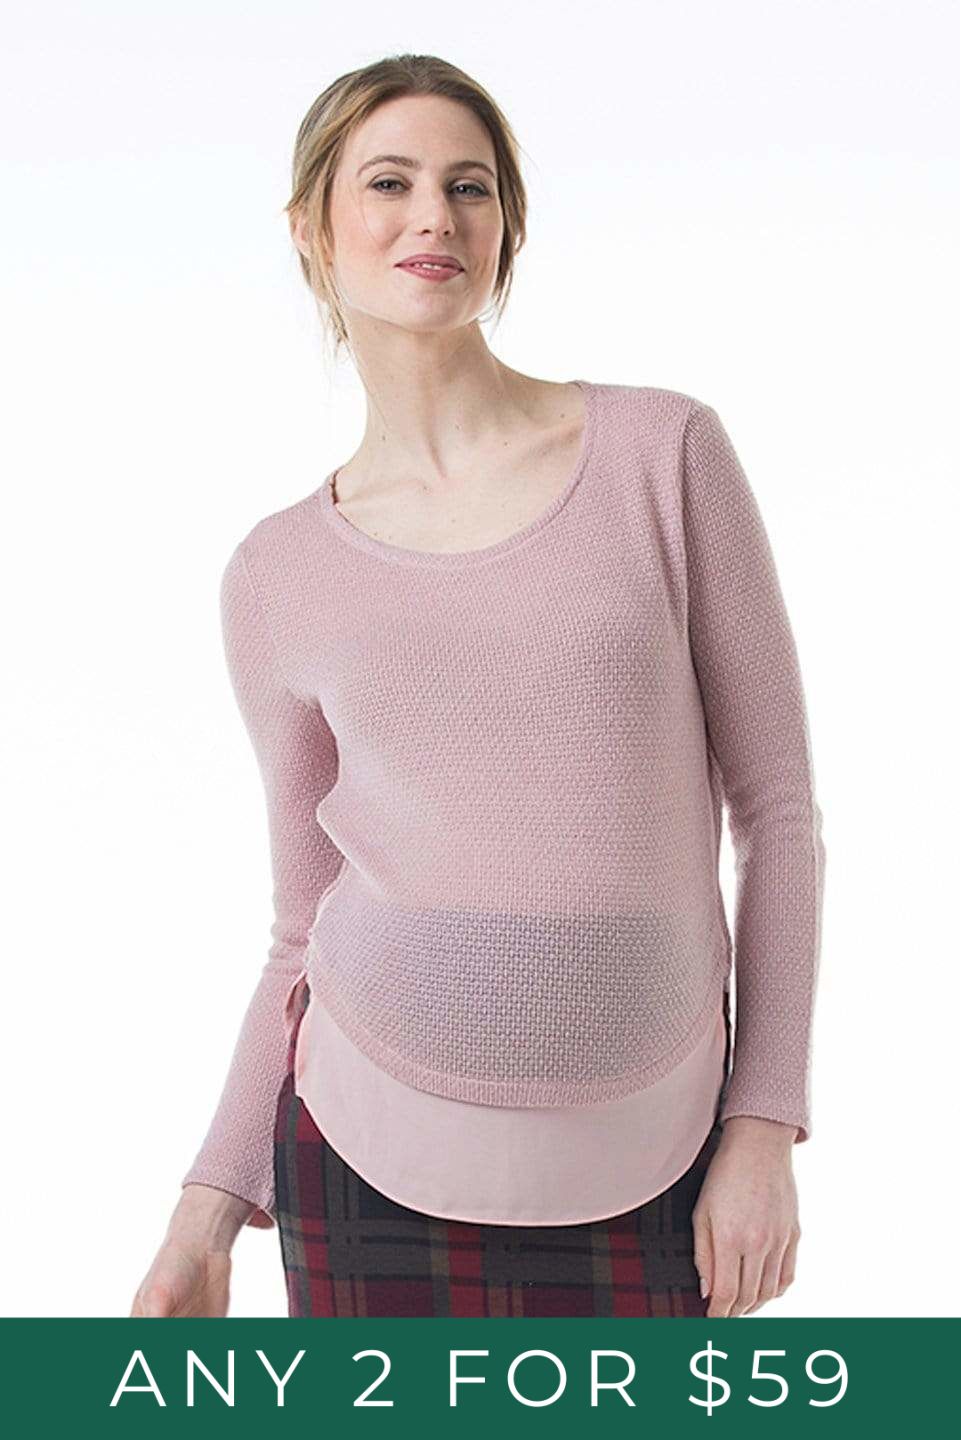 Cody Side Zipper Nursing Top Pink Maternity Tops Maternity Wear Tops Spring Maternity